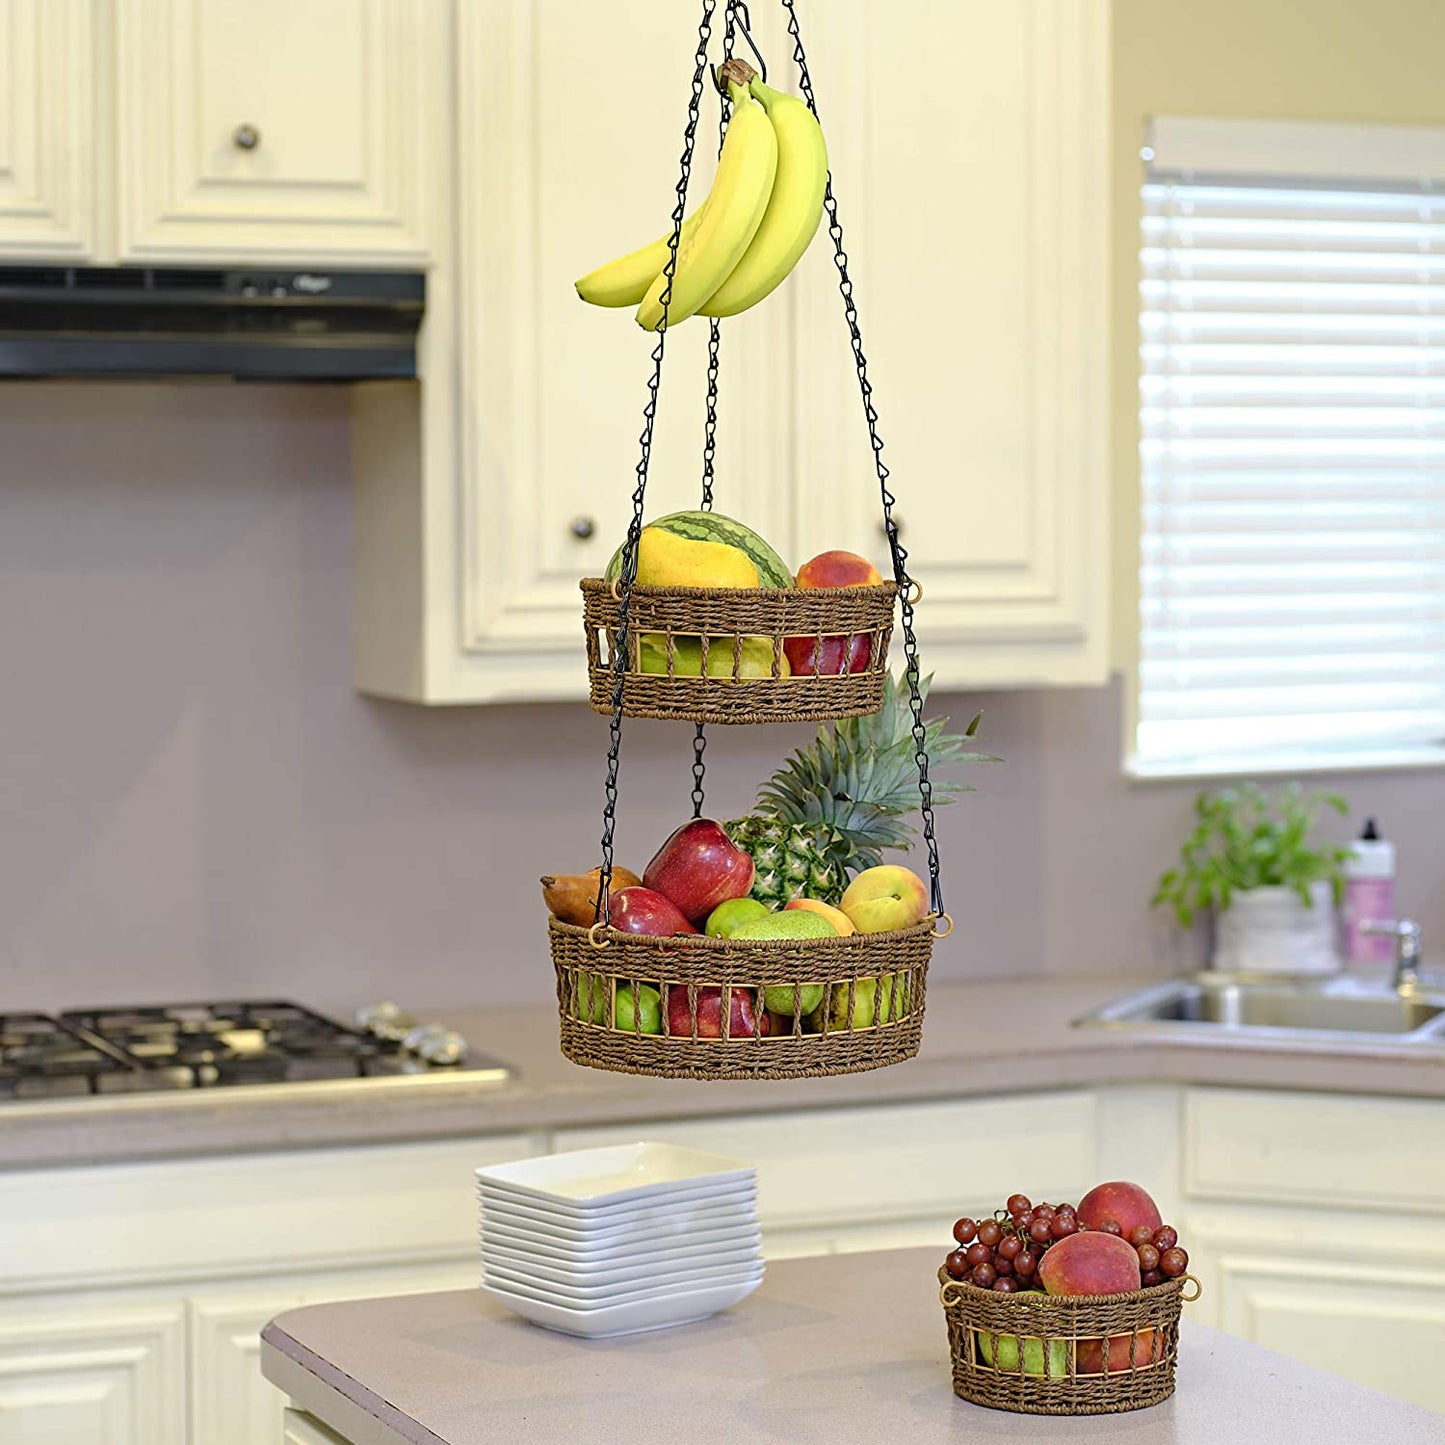 3 Tier Hanging Fruit Basket Wicker Vegetable Storage And Fruit Organizer With Banana Holder